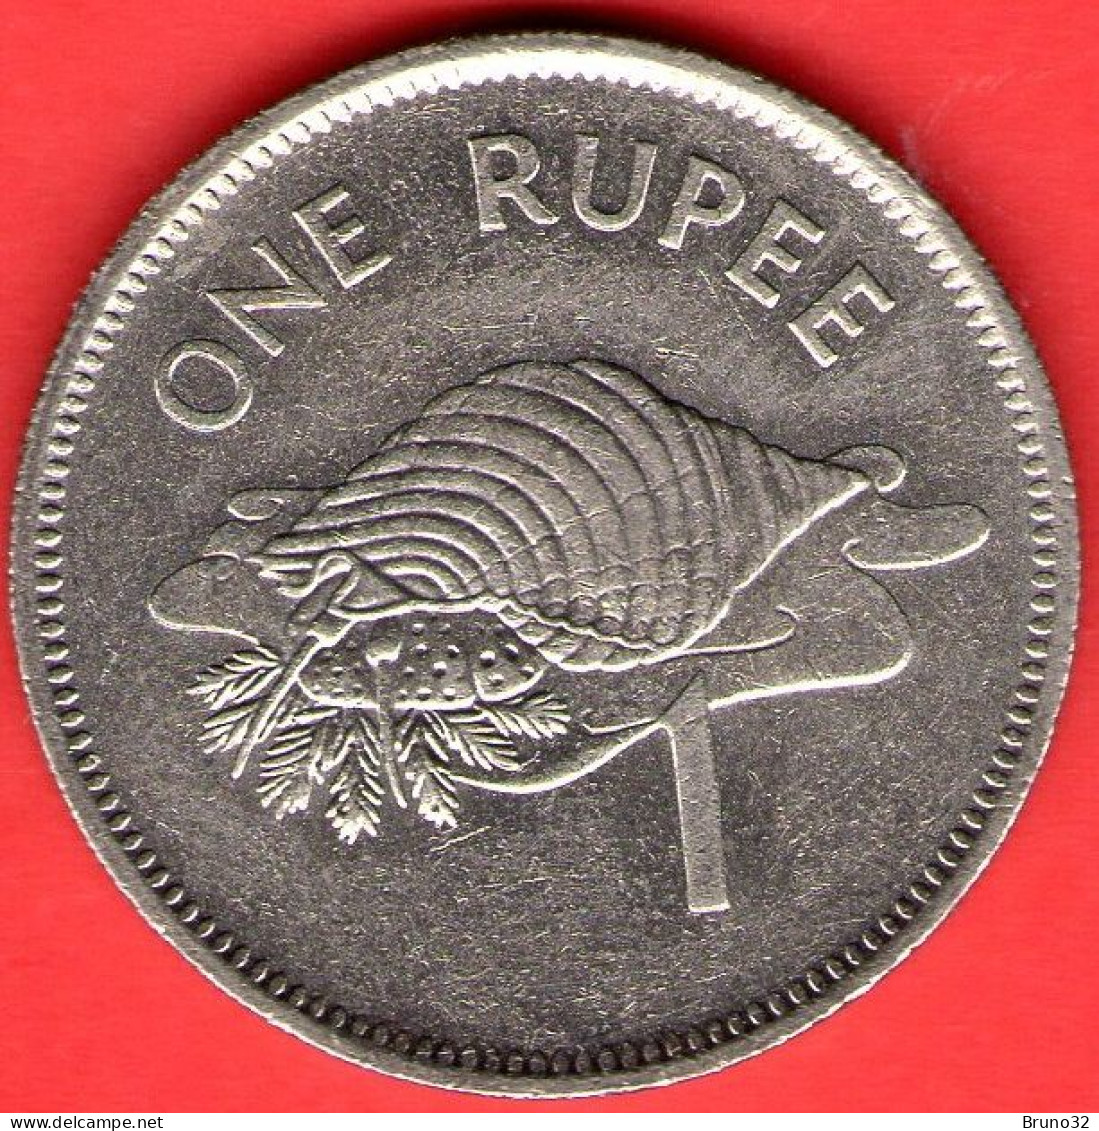 Seychelles - 1982 - 1 Rupee - QFDC/aUNC - Come Da Foto - Seychelles